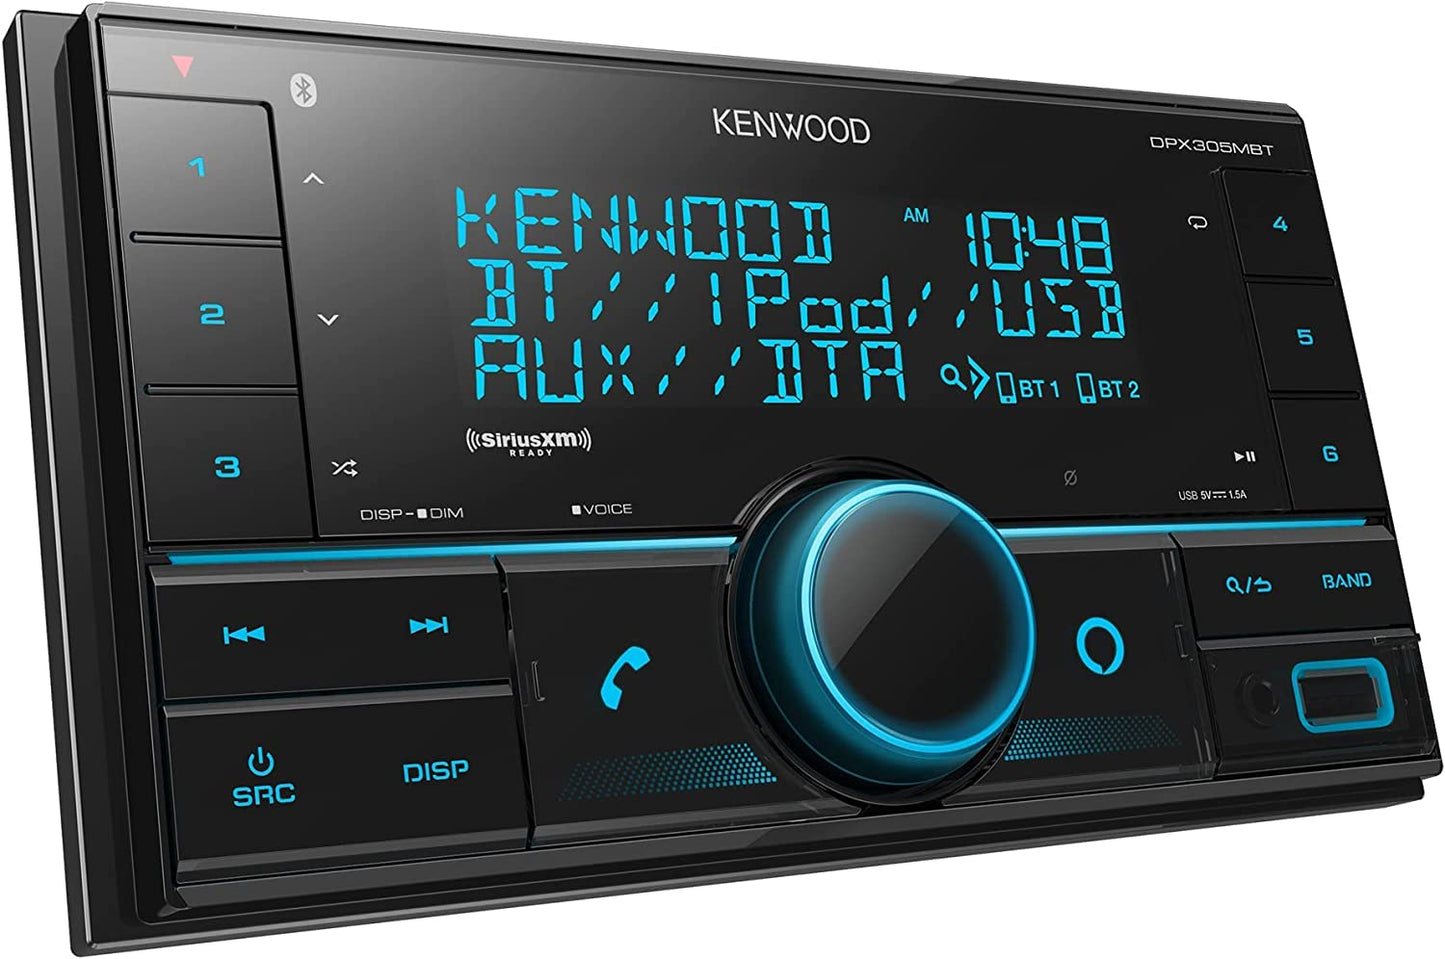 Kenwood DPX305MBT AM FM USB Digital Bluetooth Car Stereo + SXV300V1 SiriusXM Satellite Tuner